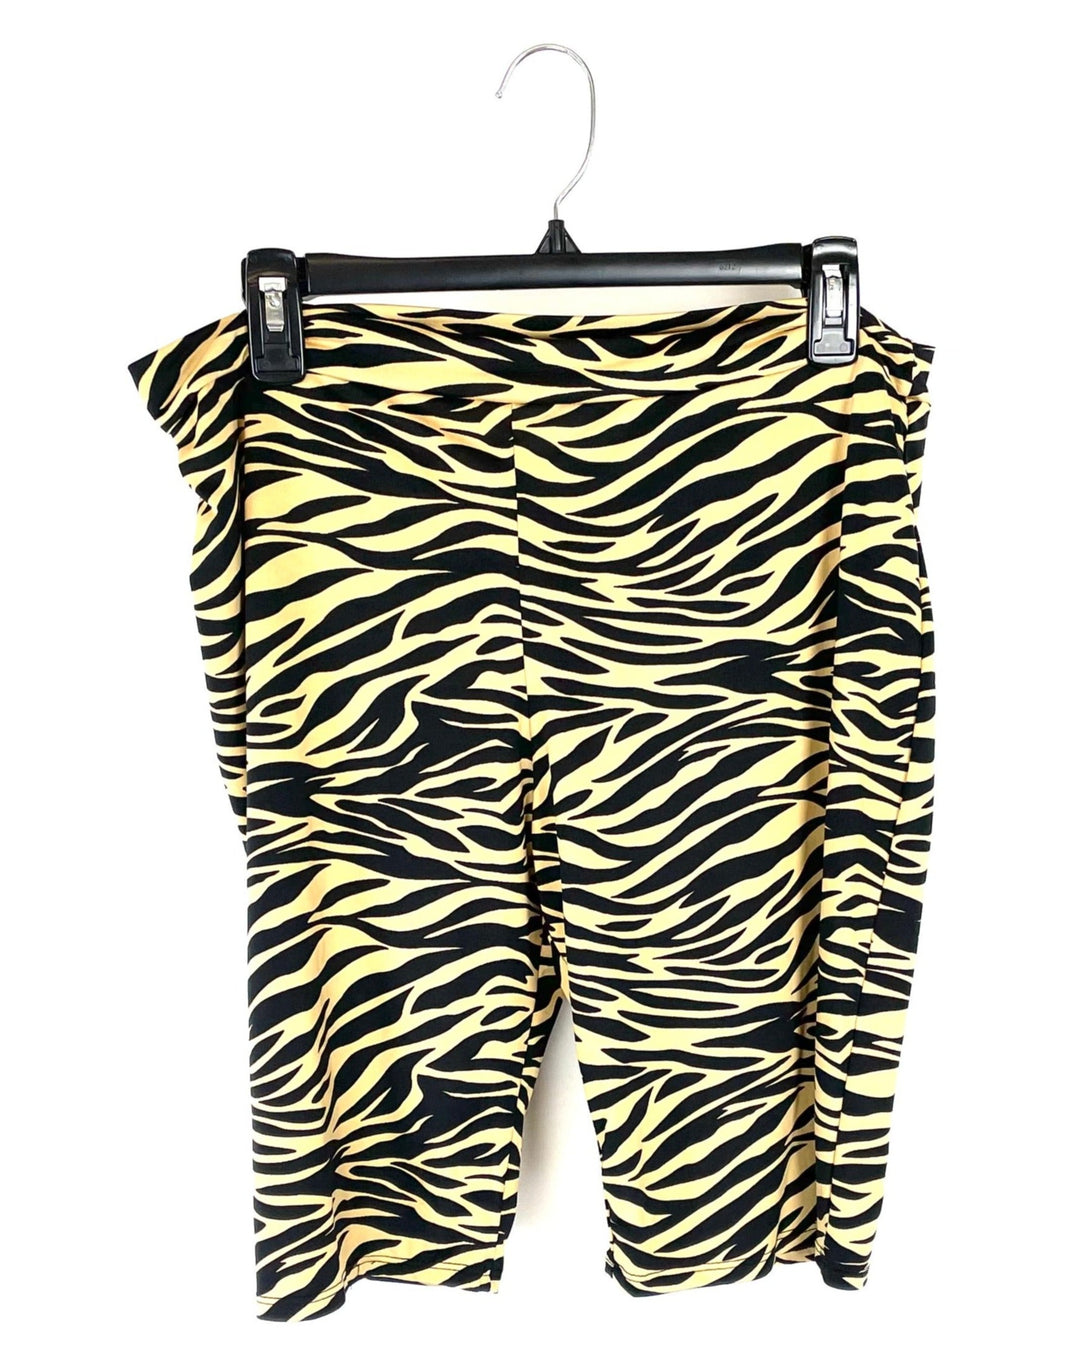 Tan Zebra Print Biker Shorts - 1X and 2X